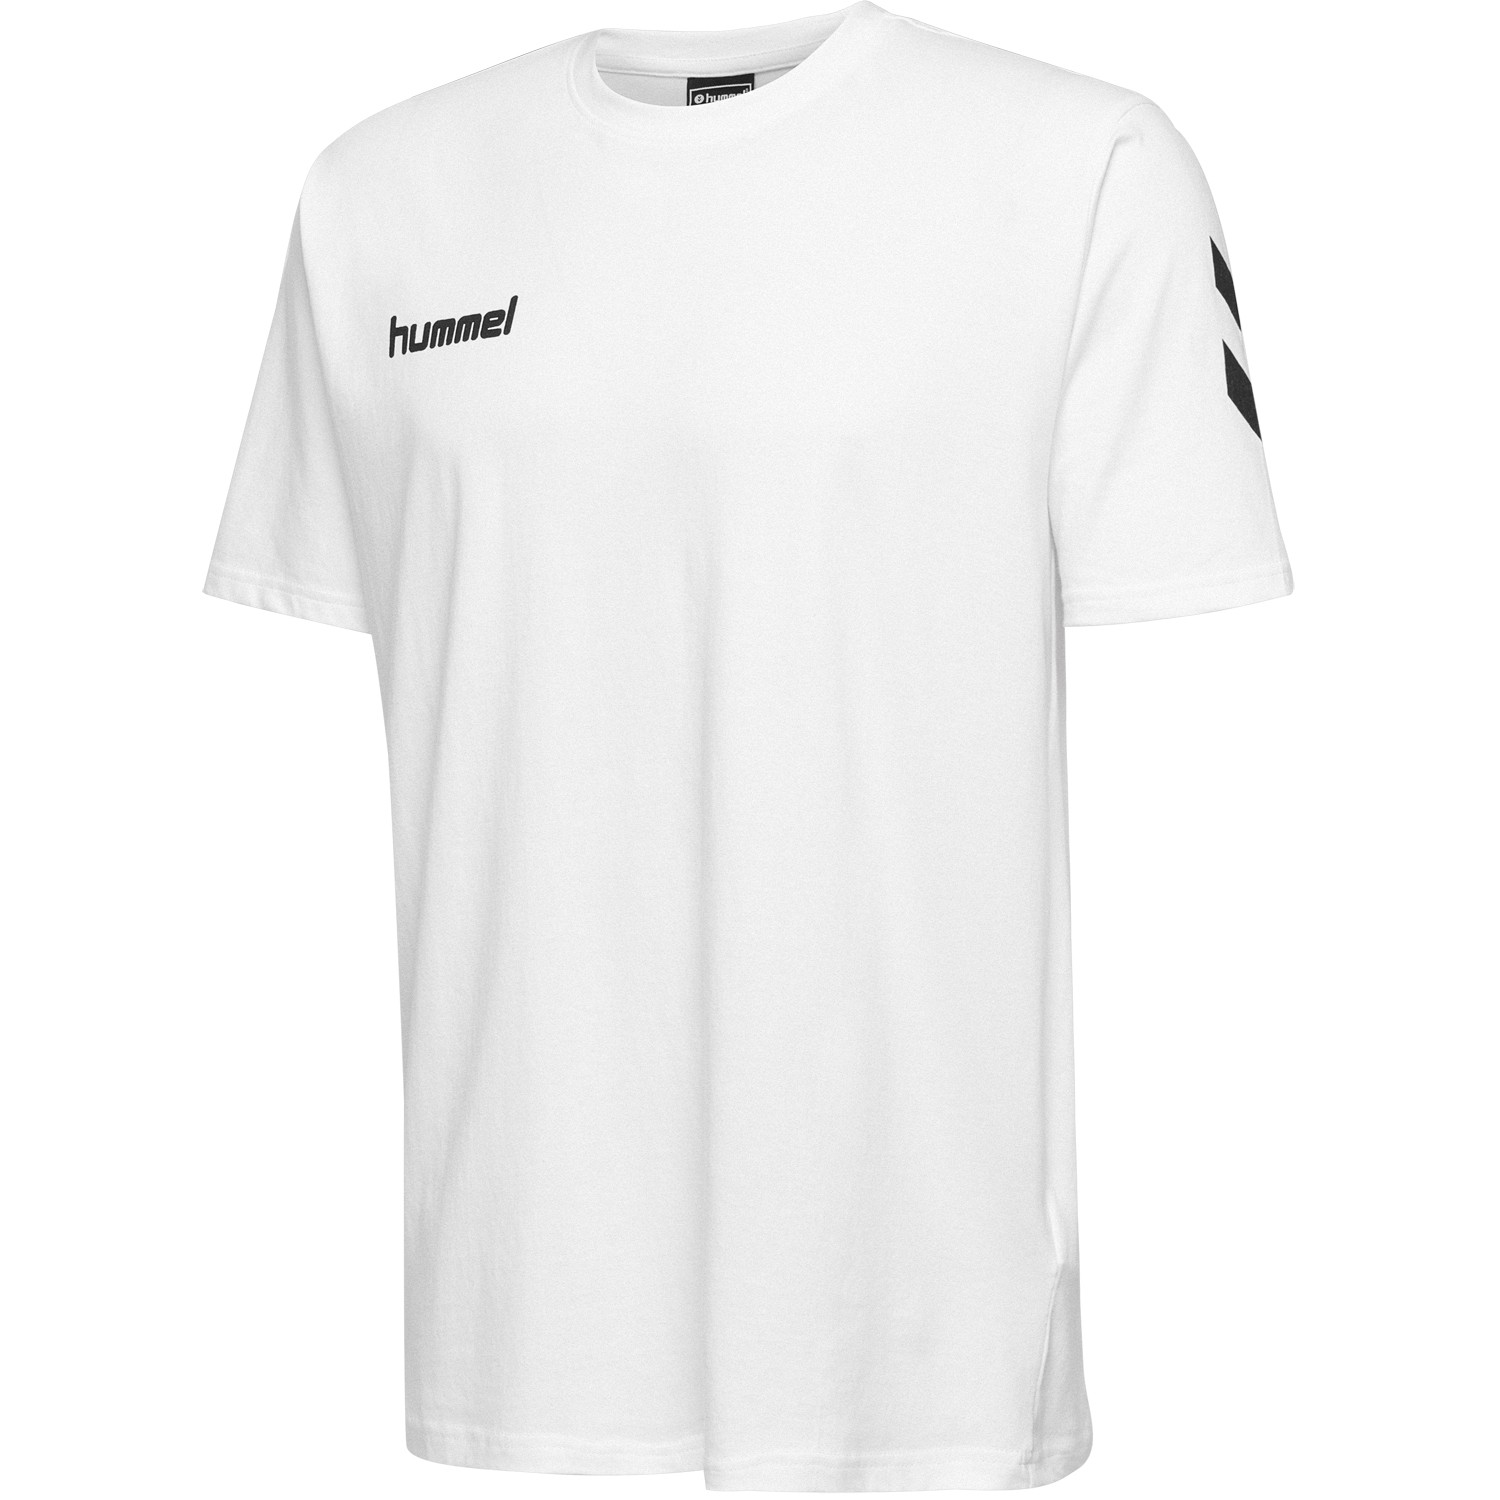 Hummel online T-Shirts Hummel kaufen - T-Shirts